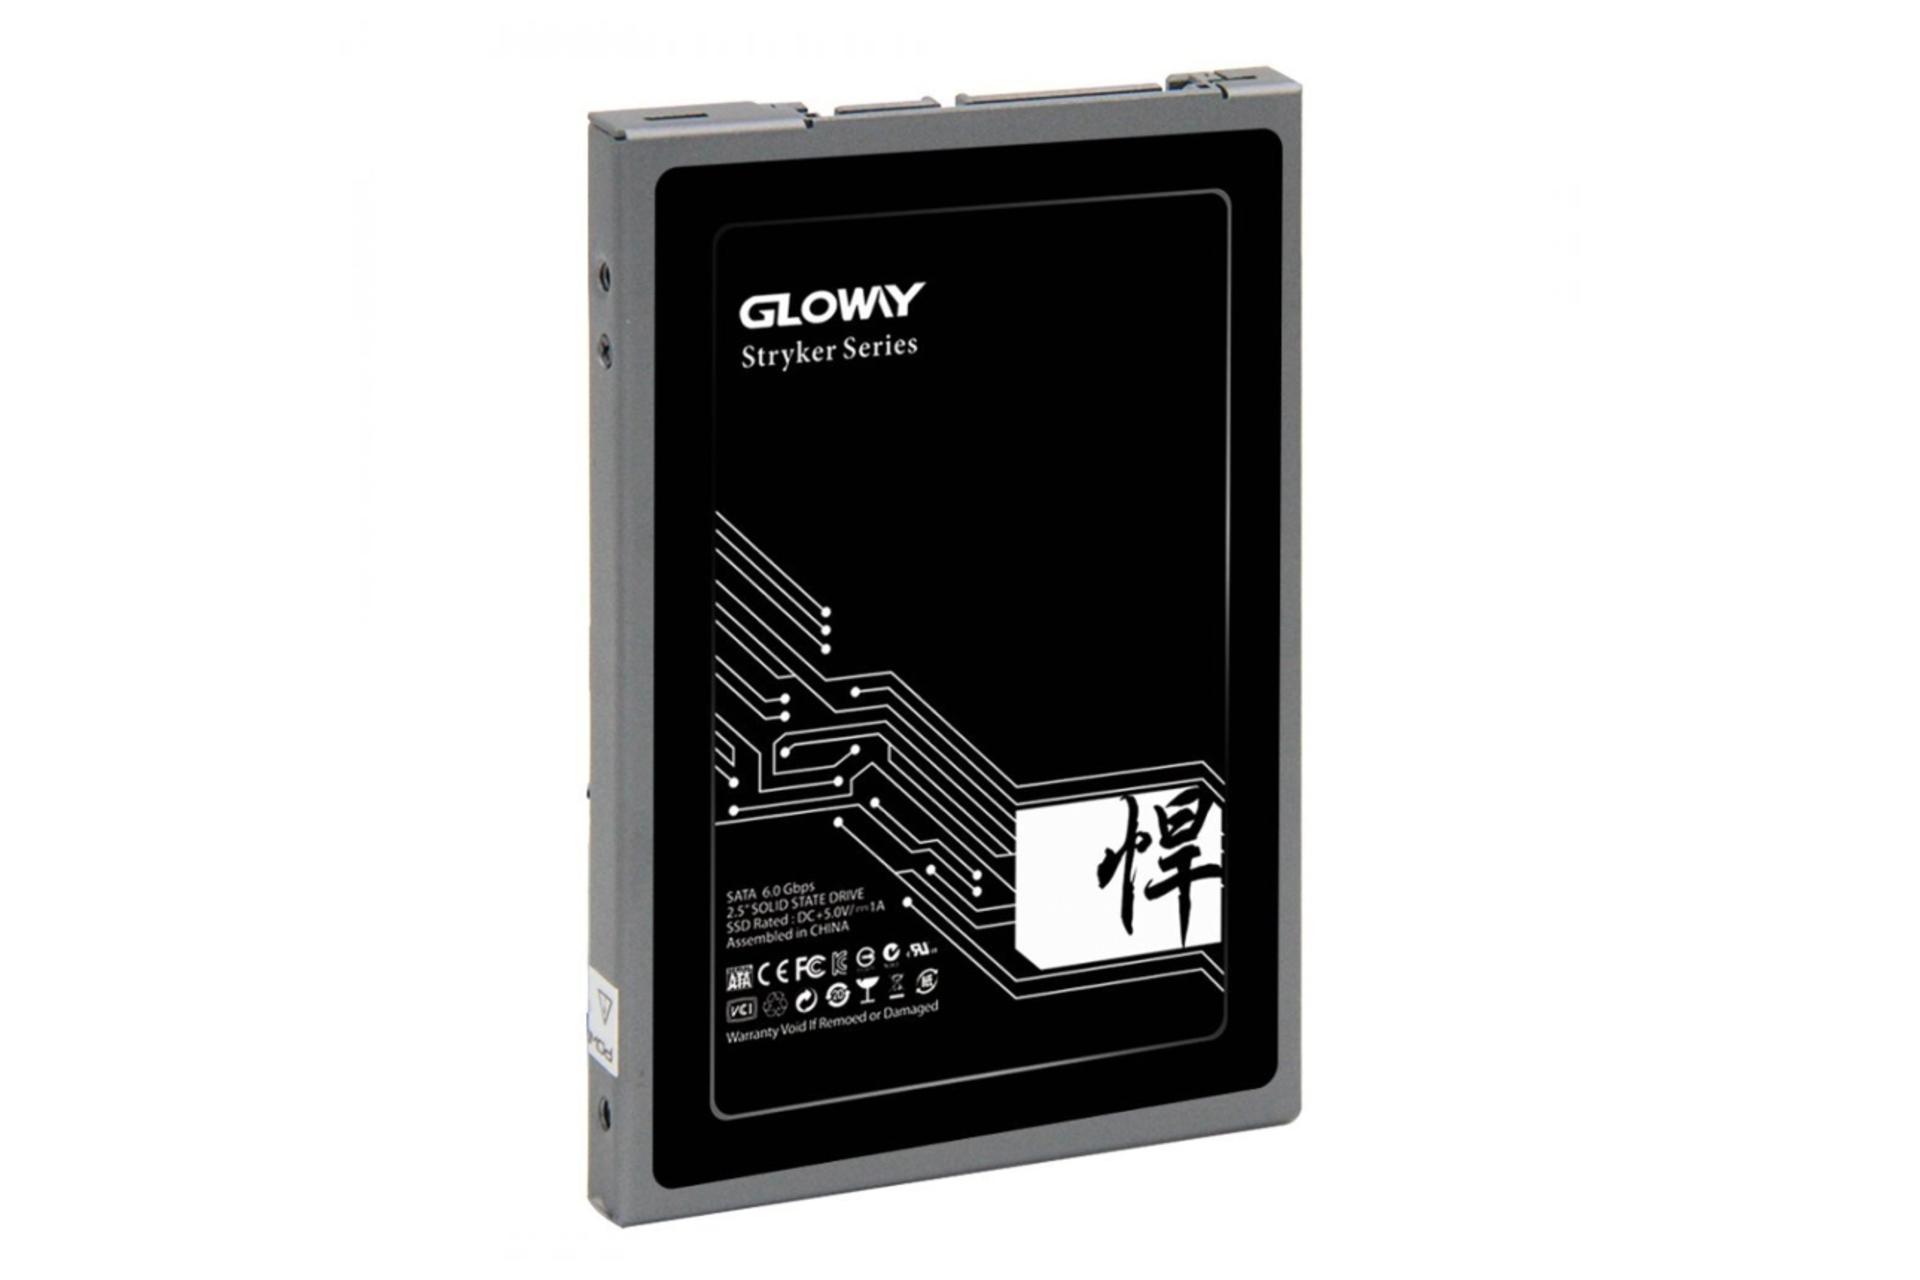 نمای چپ SSD گلووی Gloway Stryker Series SATA 2.5 Inch